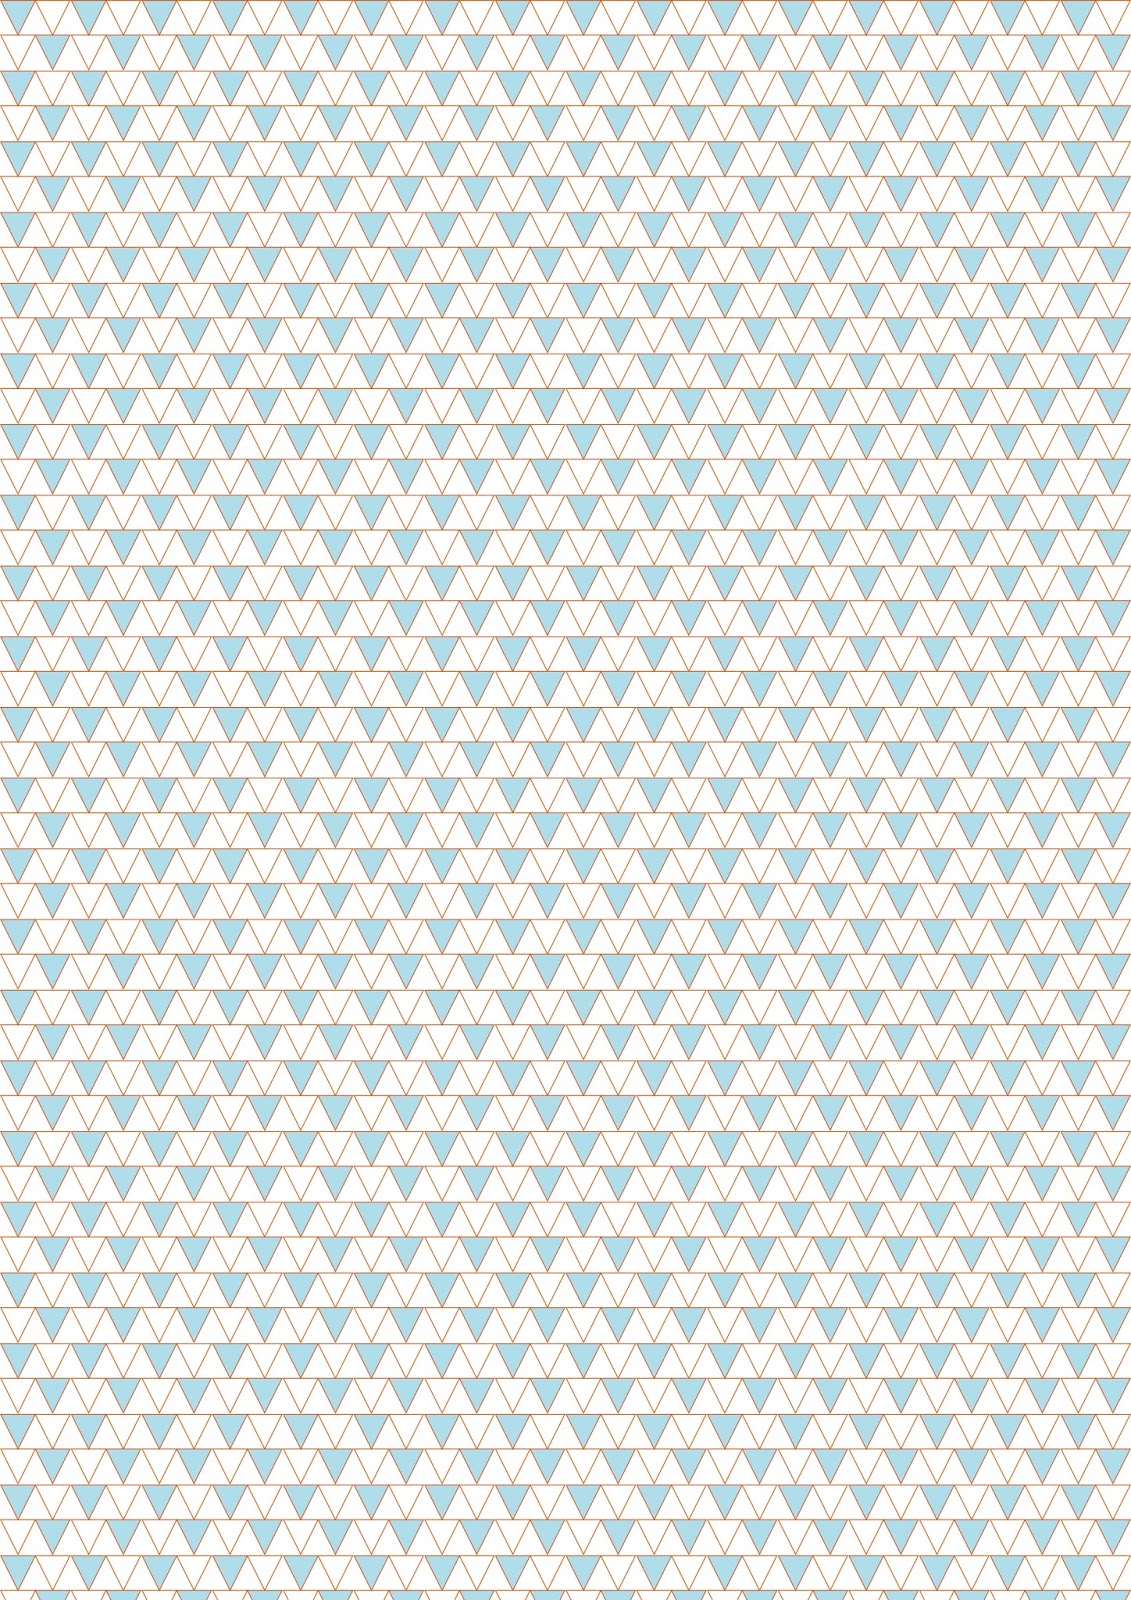 http://4.bp.blogspot.com/-1RMijapJGys/VPxCZup7tsI/AAAAAAAAiUU/3GjRHmLJx3A/s1600/dusty_blue_pattern_paper.jpg